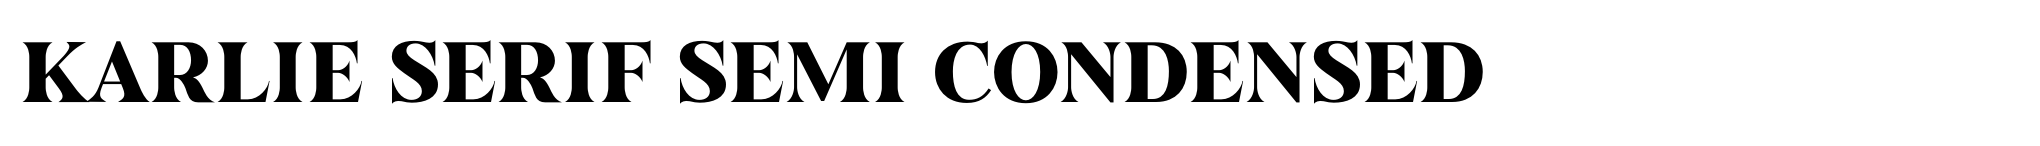 Karlie Serif Semi Condensed image